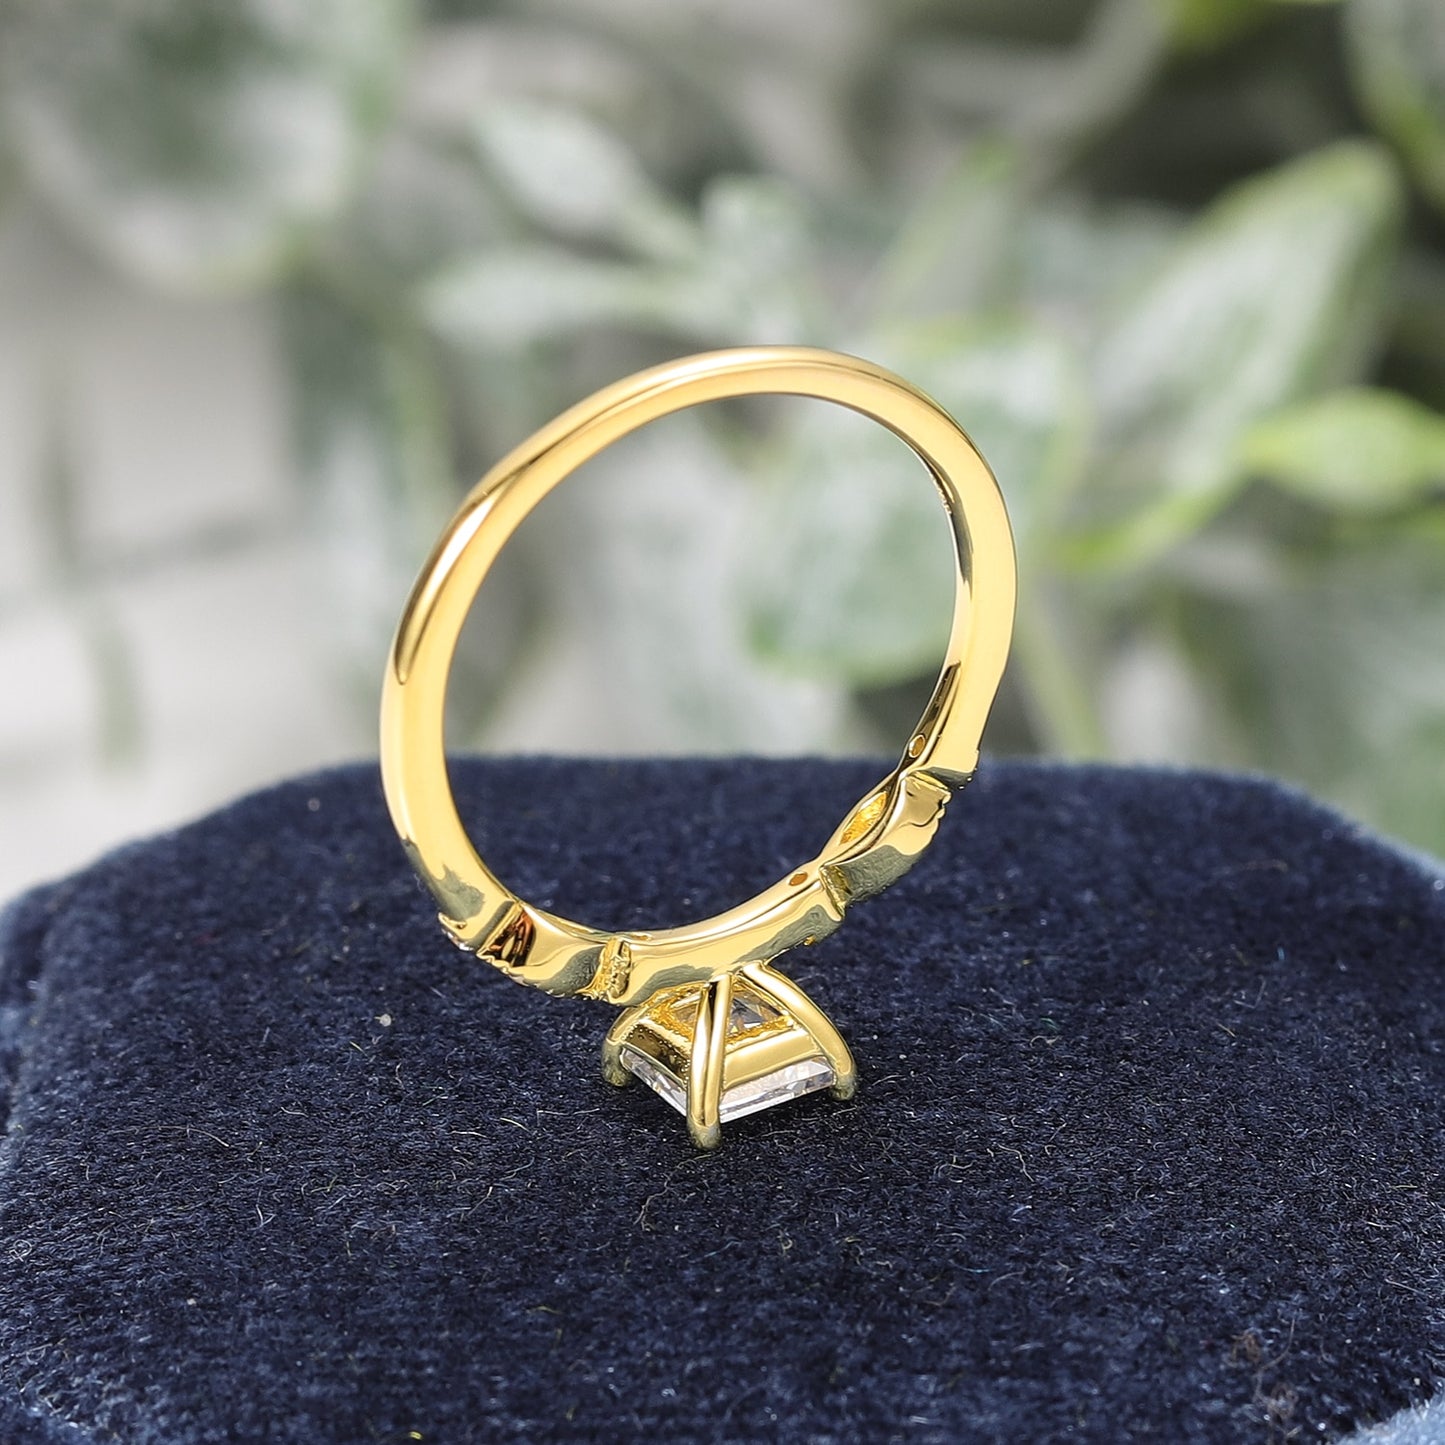 A gold art deco princess cut moissanite engagement ring.